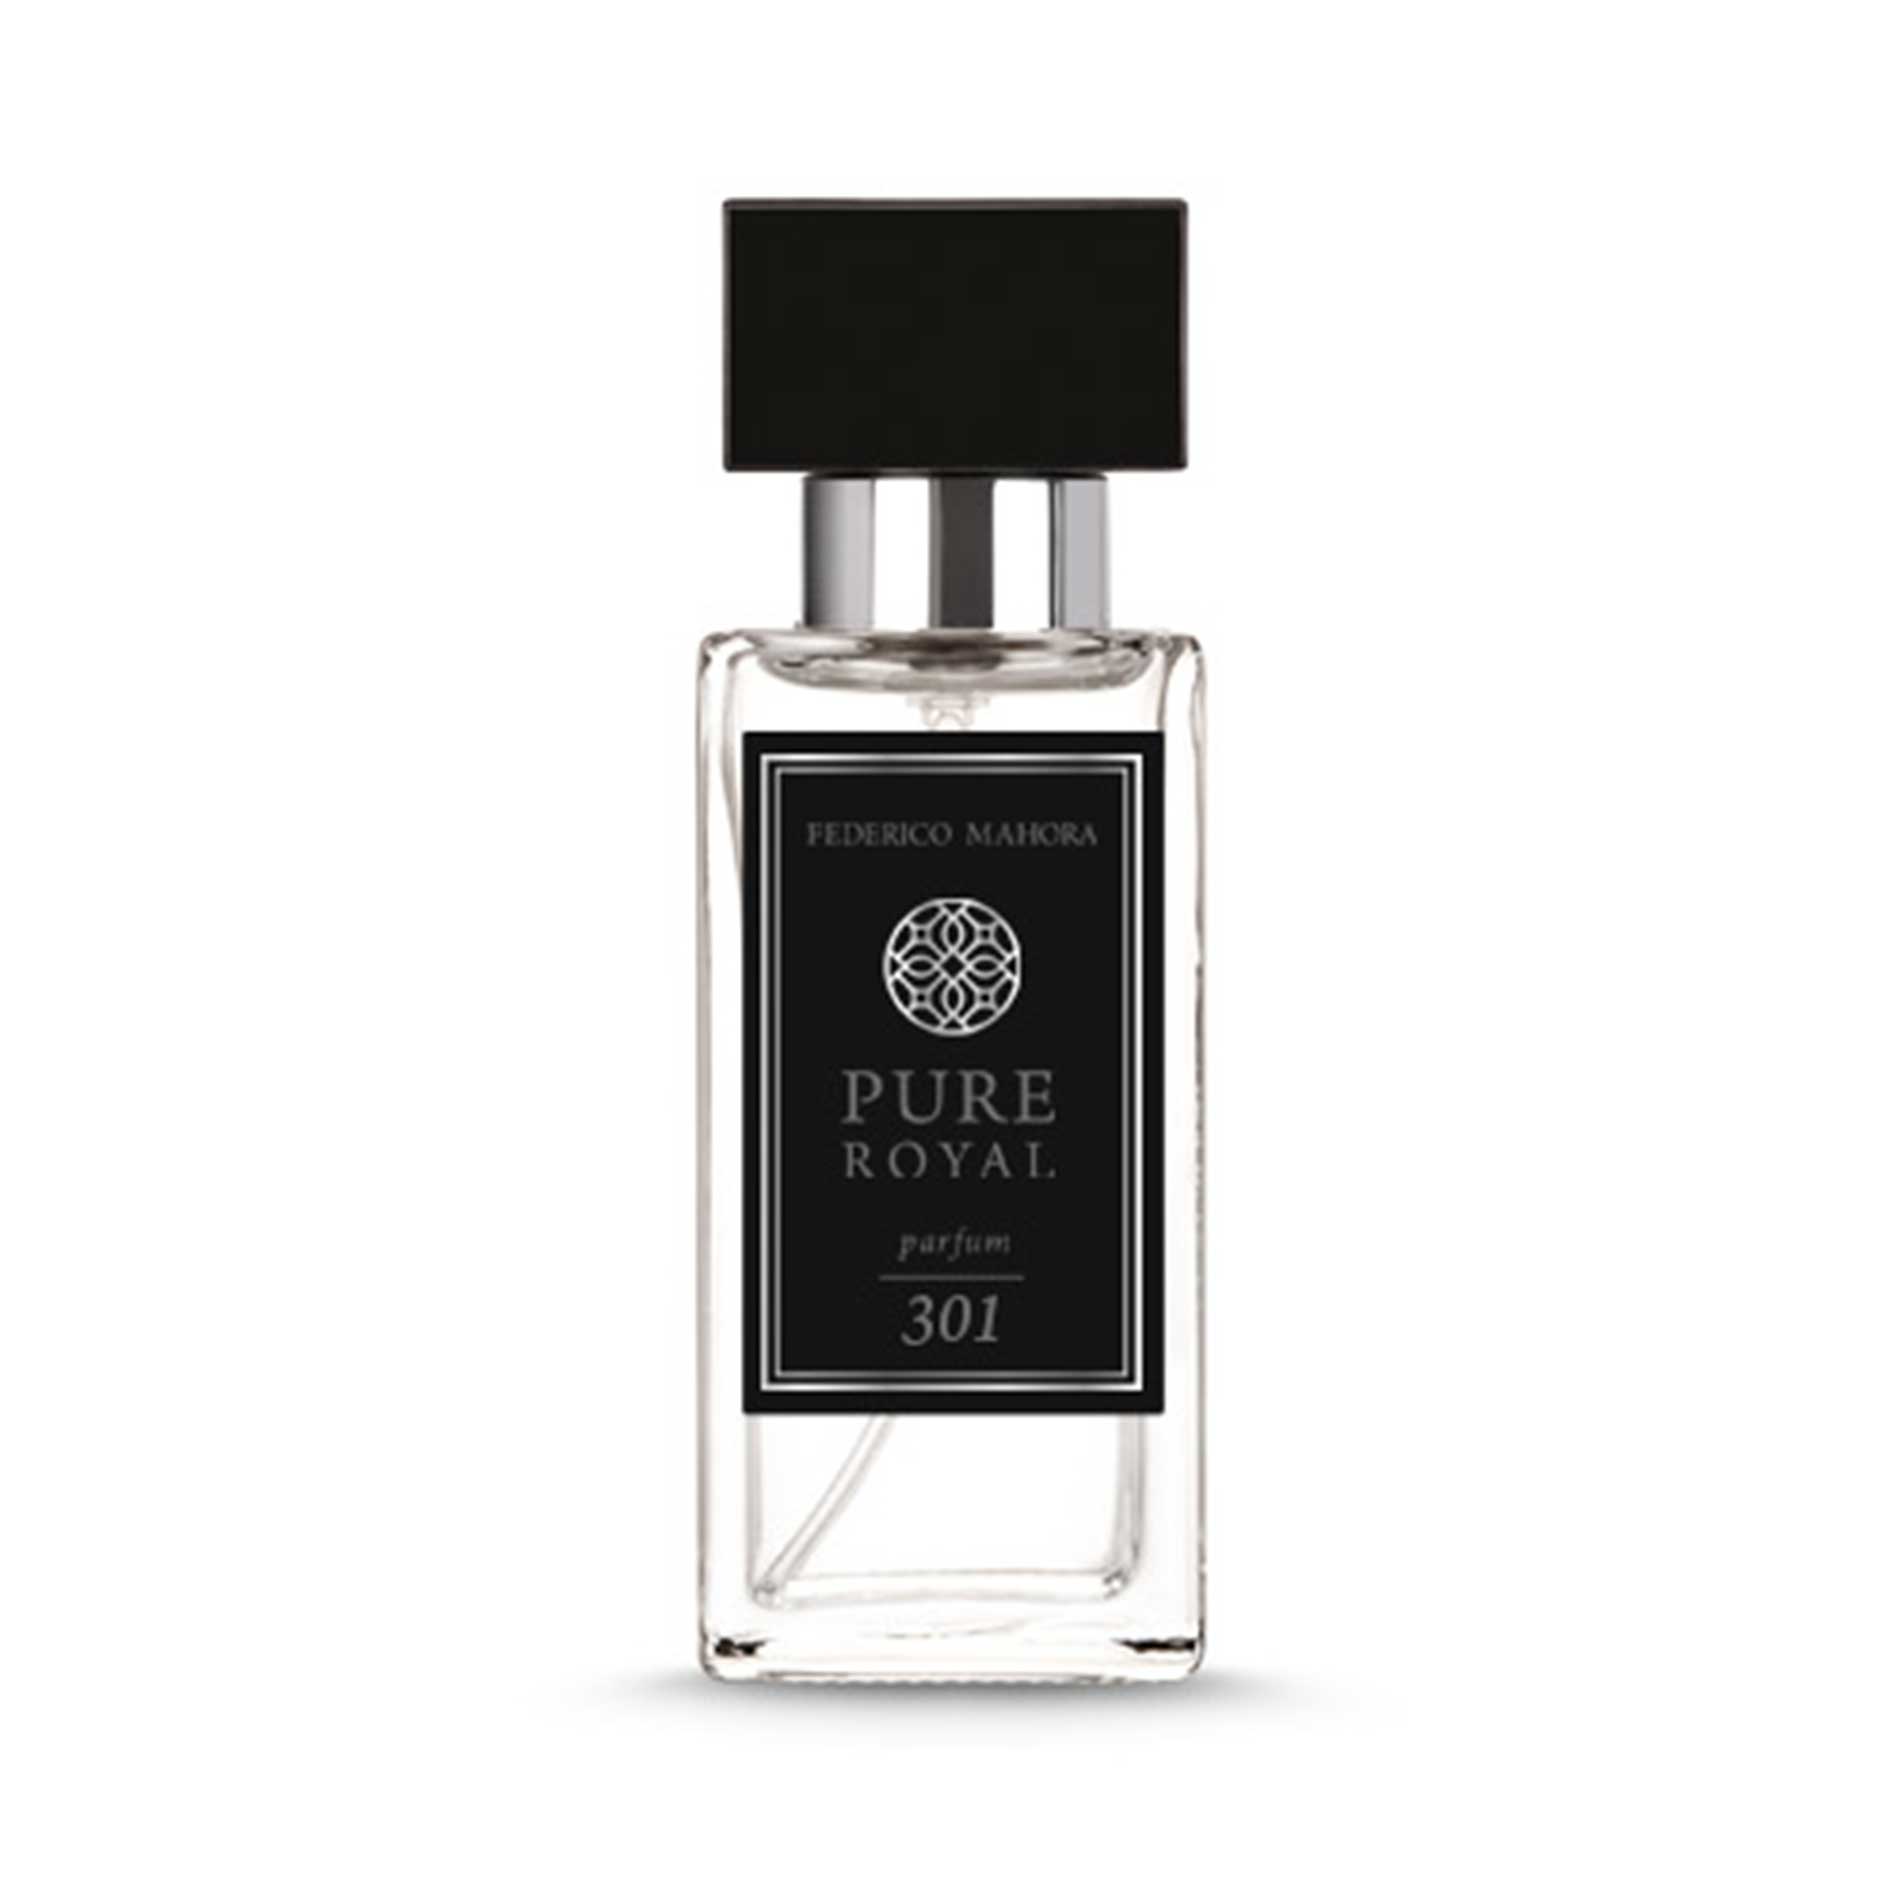 Federico Mahora Pure Royal Parfum 301